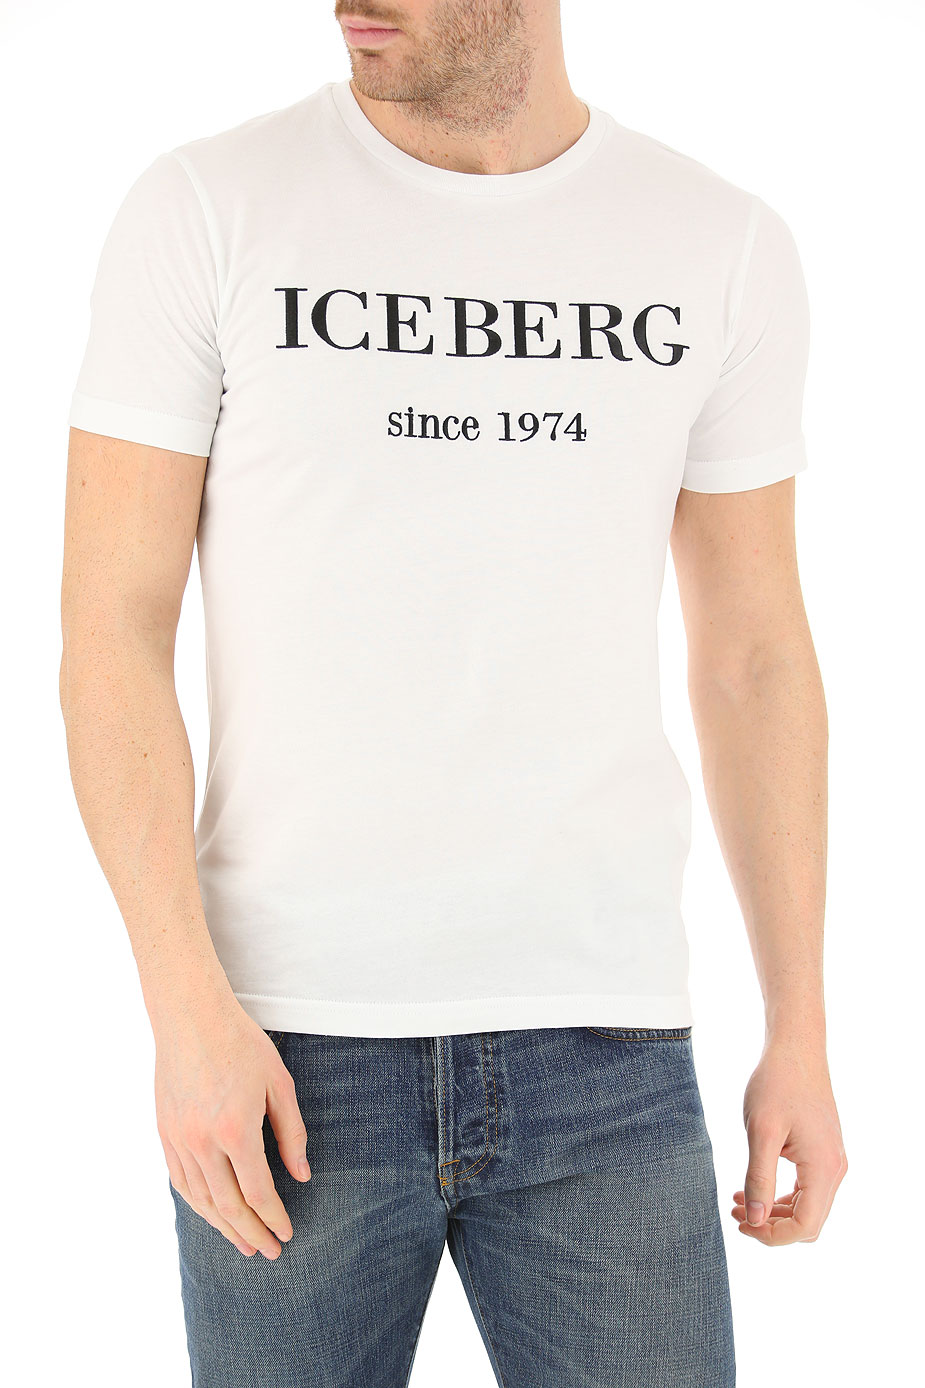 iceberg clothing defective